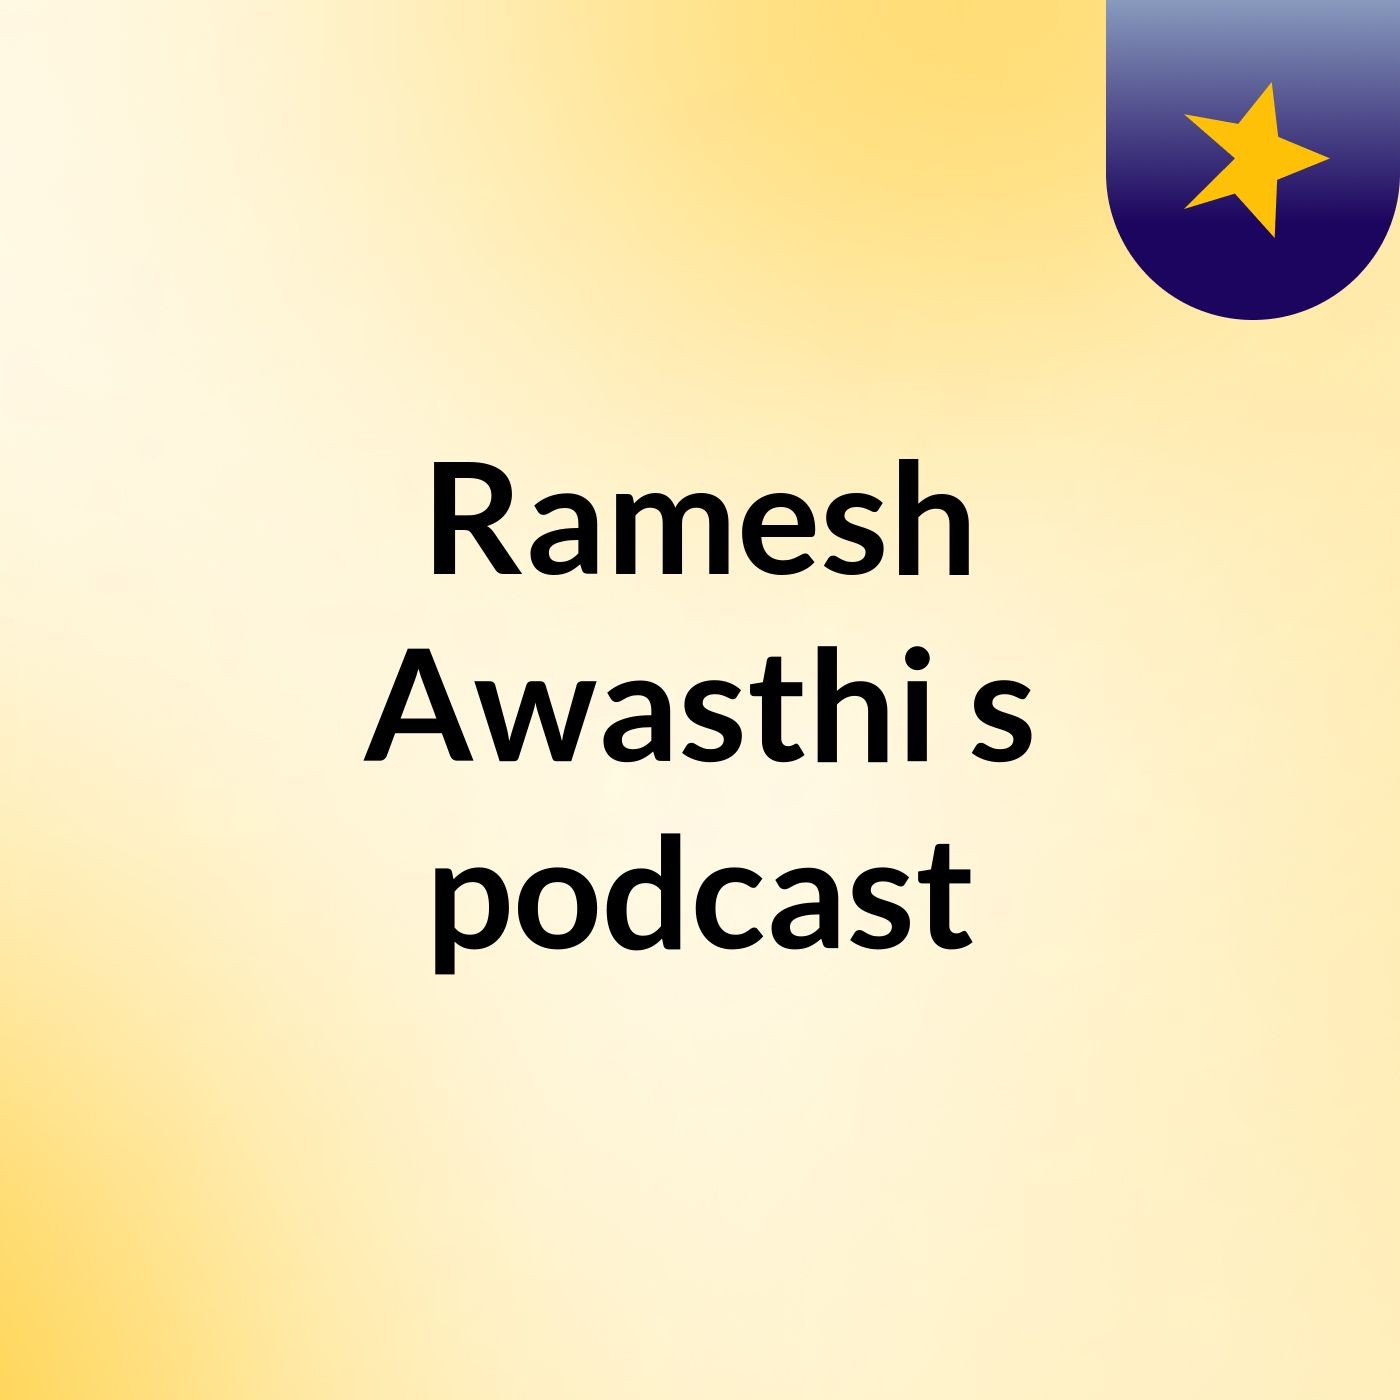 Episode 8 - Ramesh Awasthi's podcast